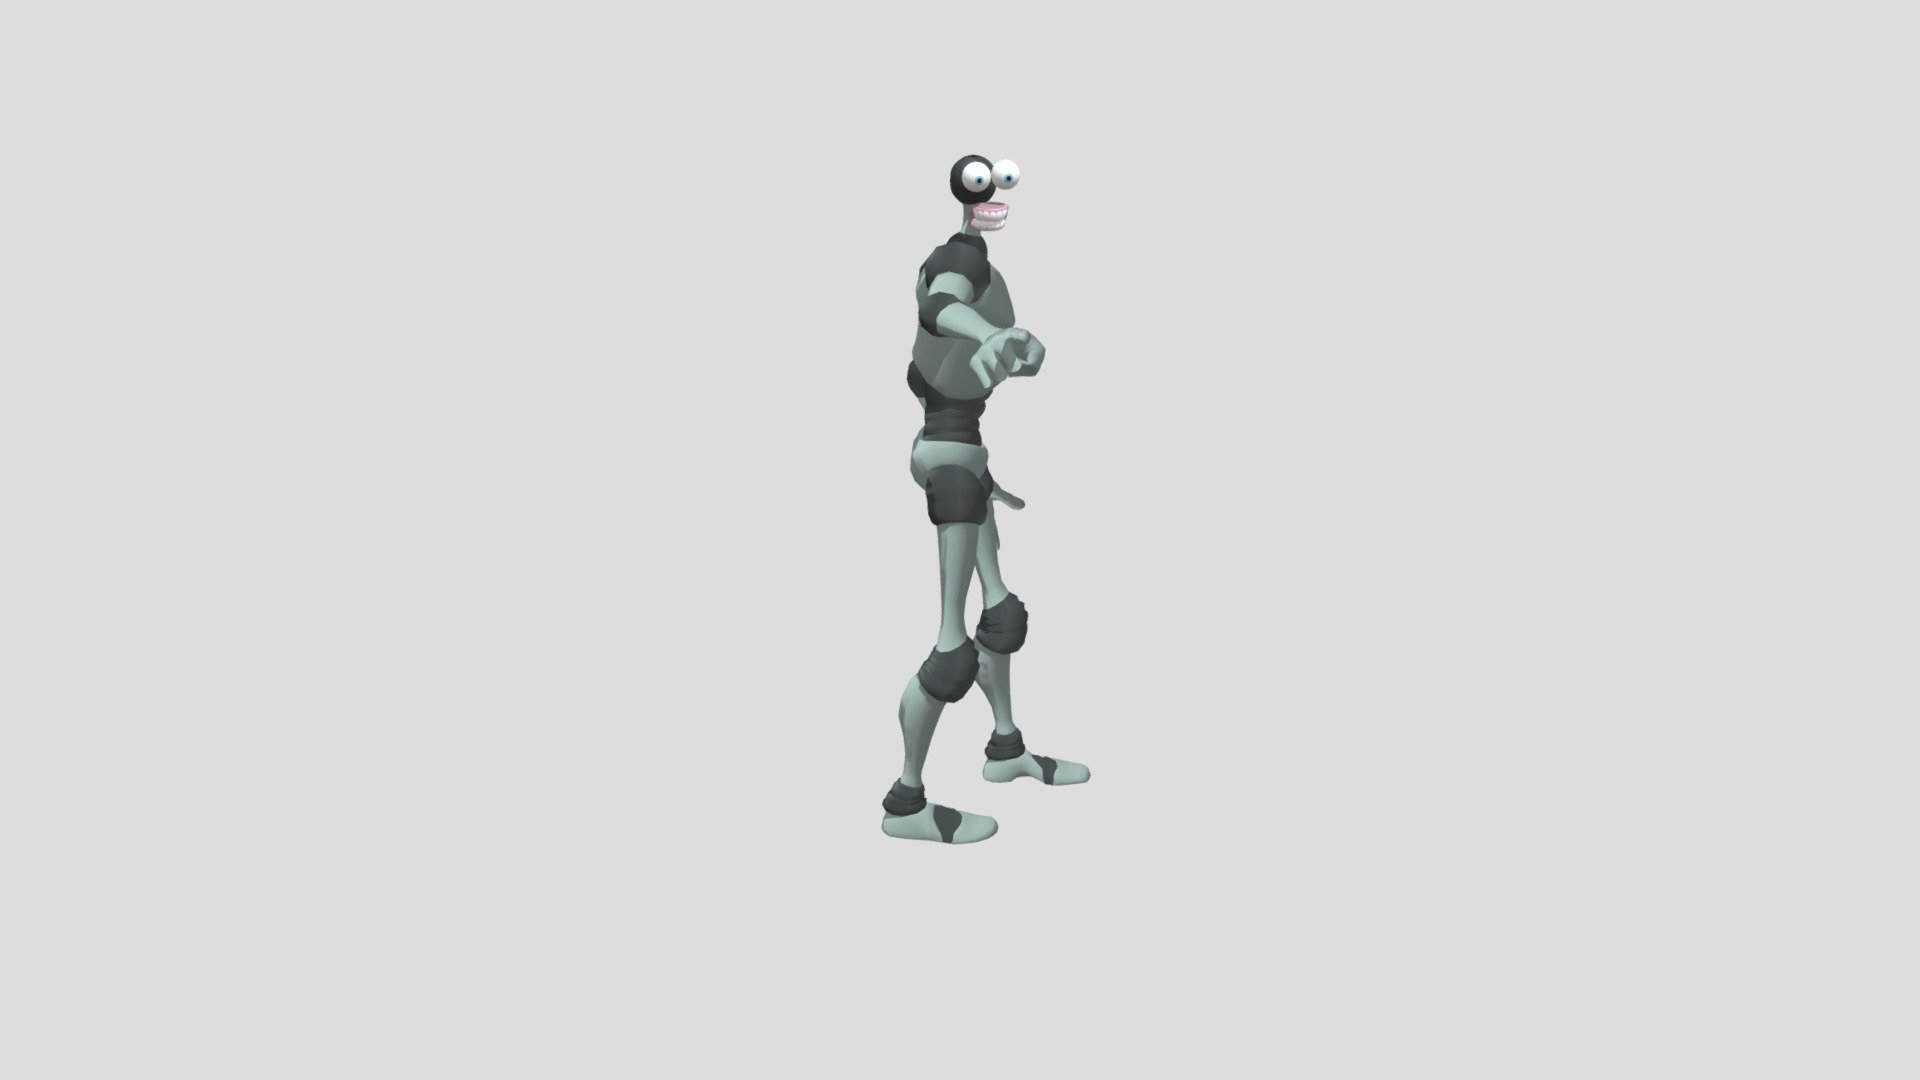 ArtStation - Running Man Dance Animation